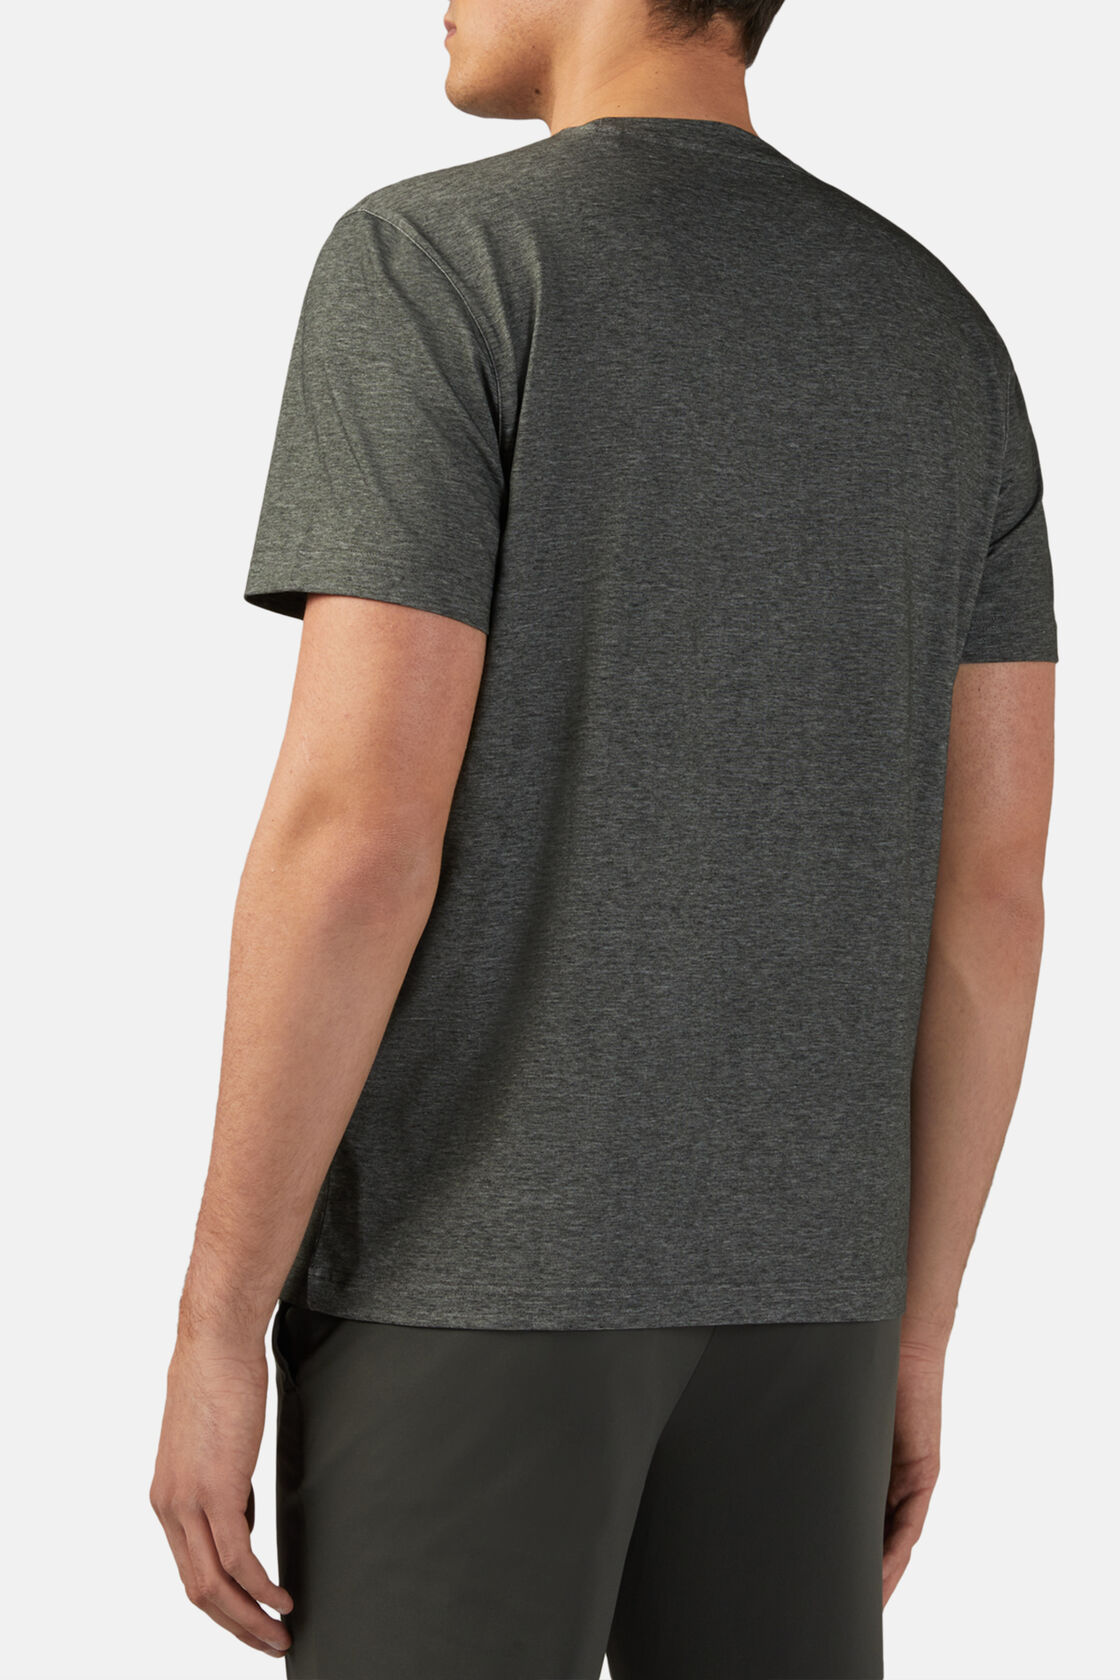 T-Shirt in Cotton, Nylon & Tencel, Military Green, hi-res